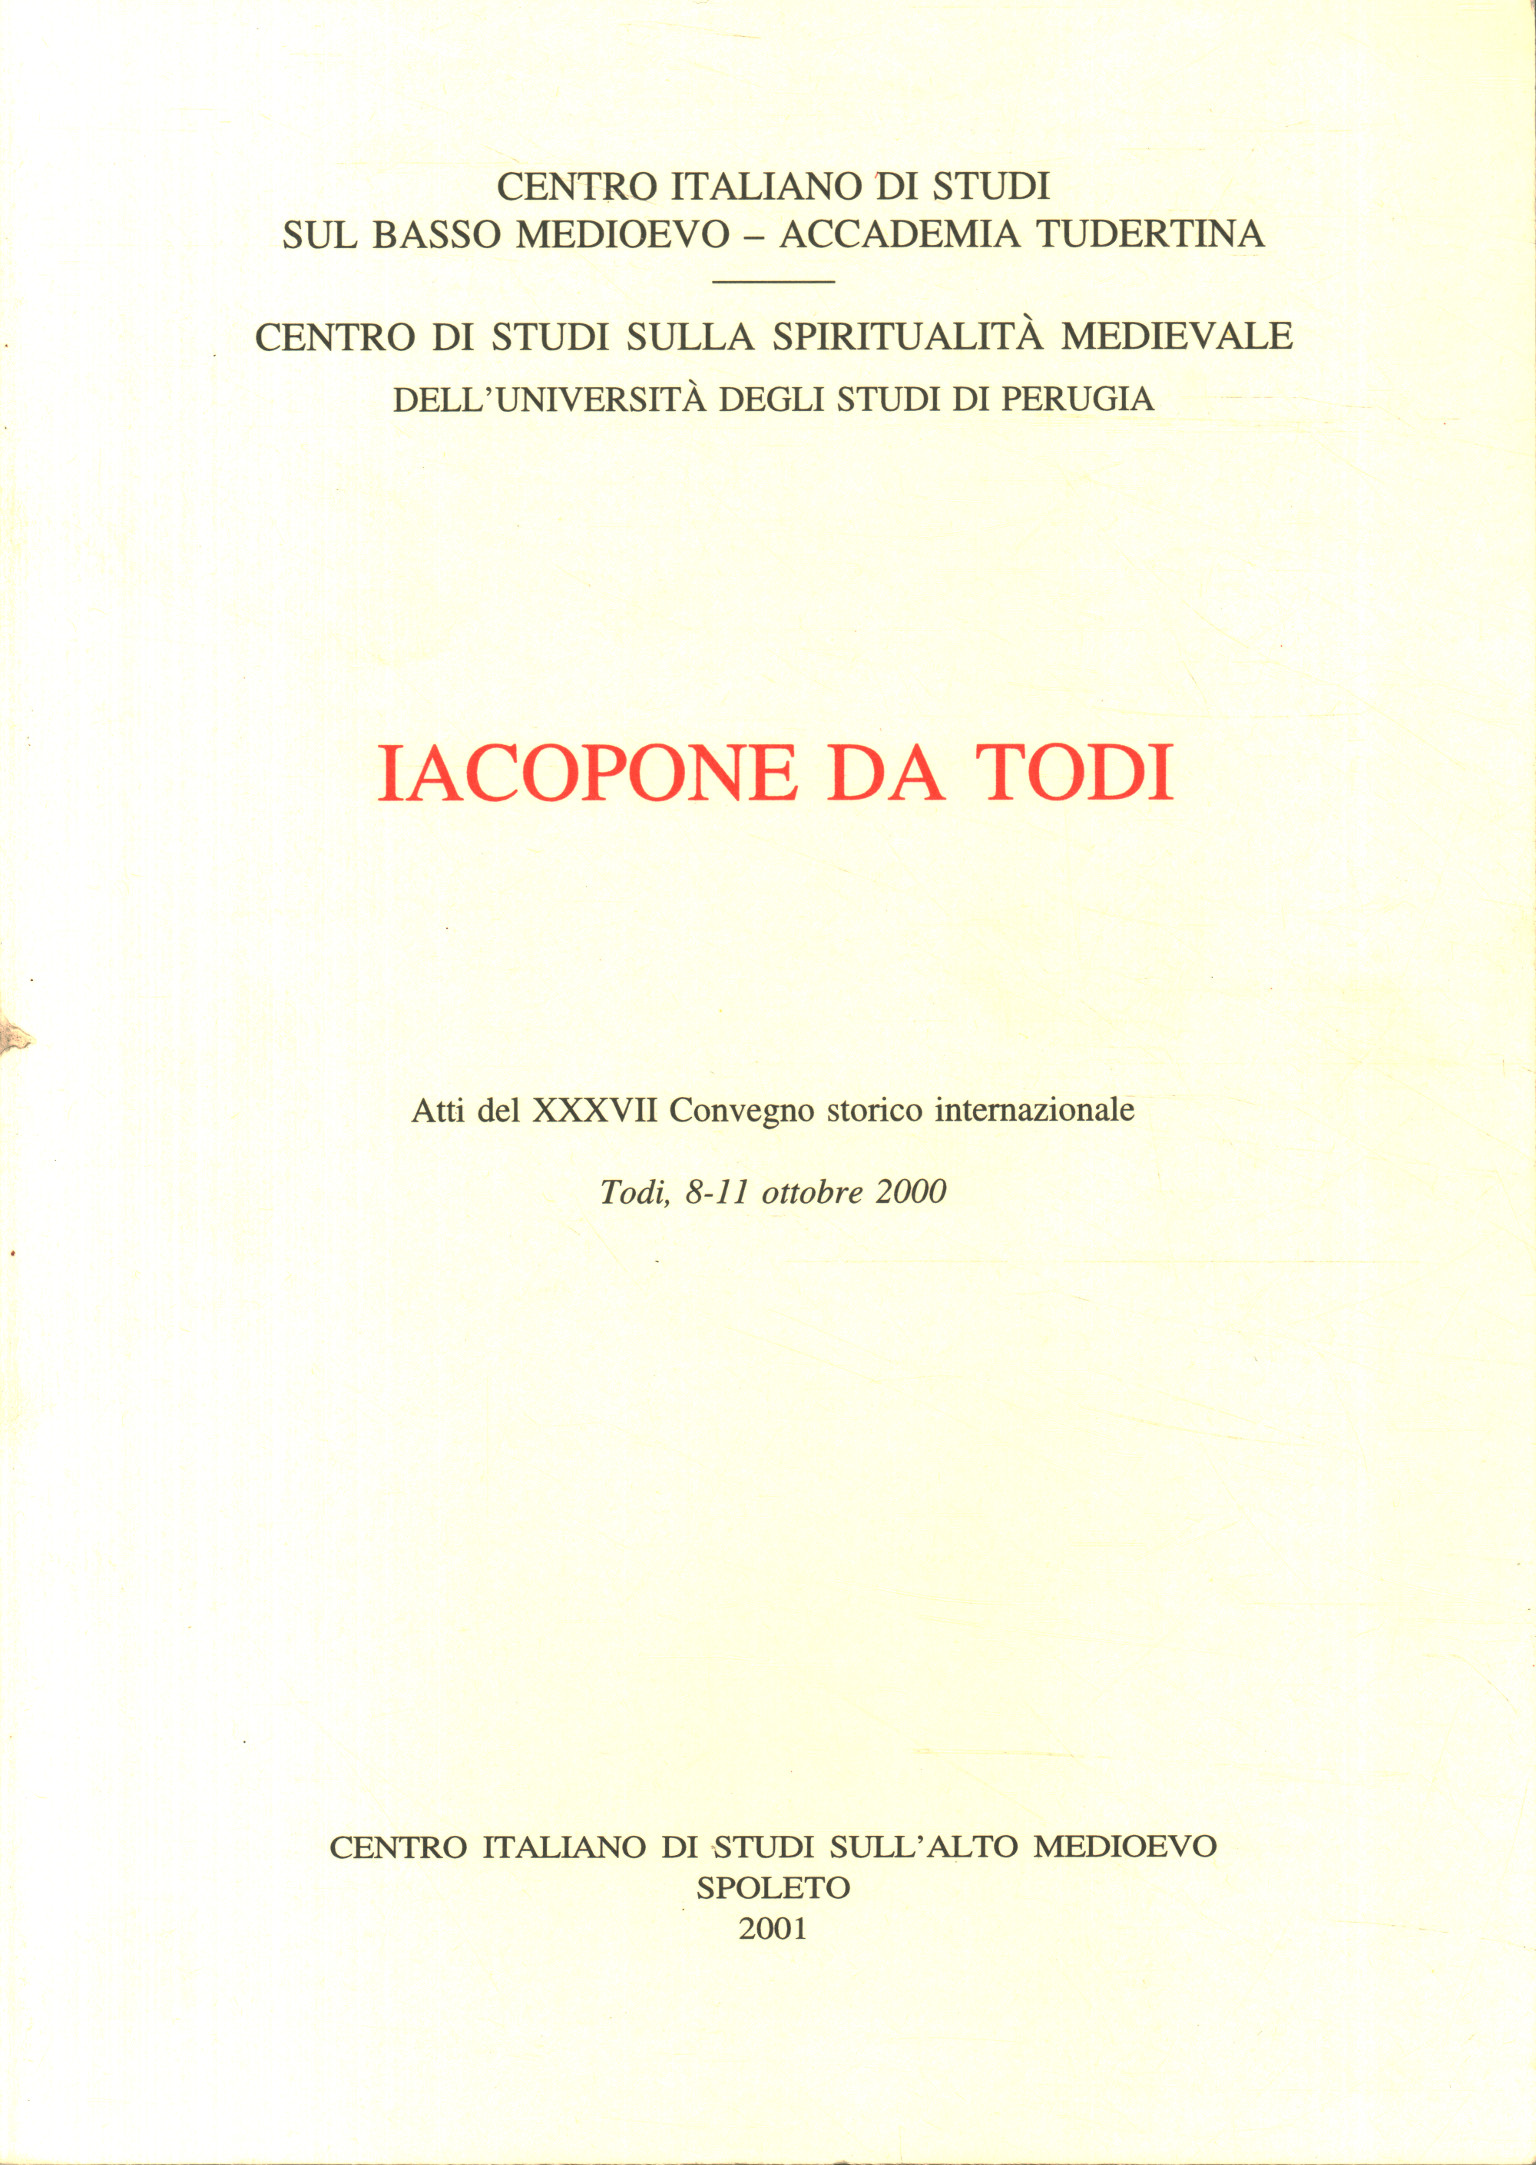 Iacopone from Todi